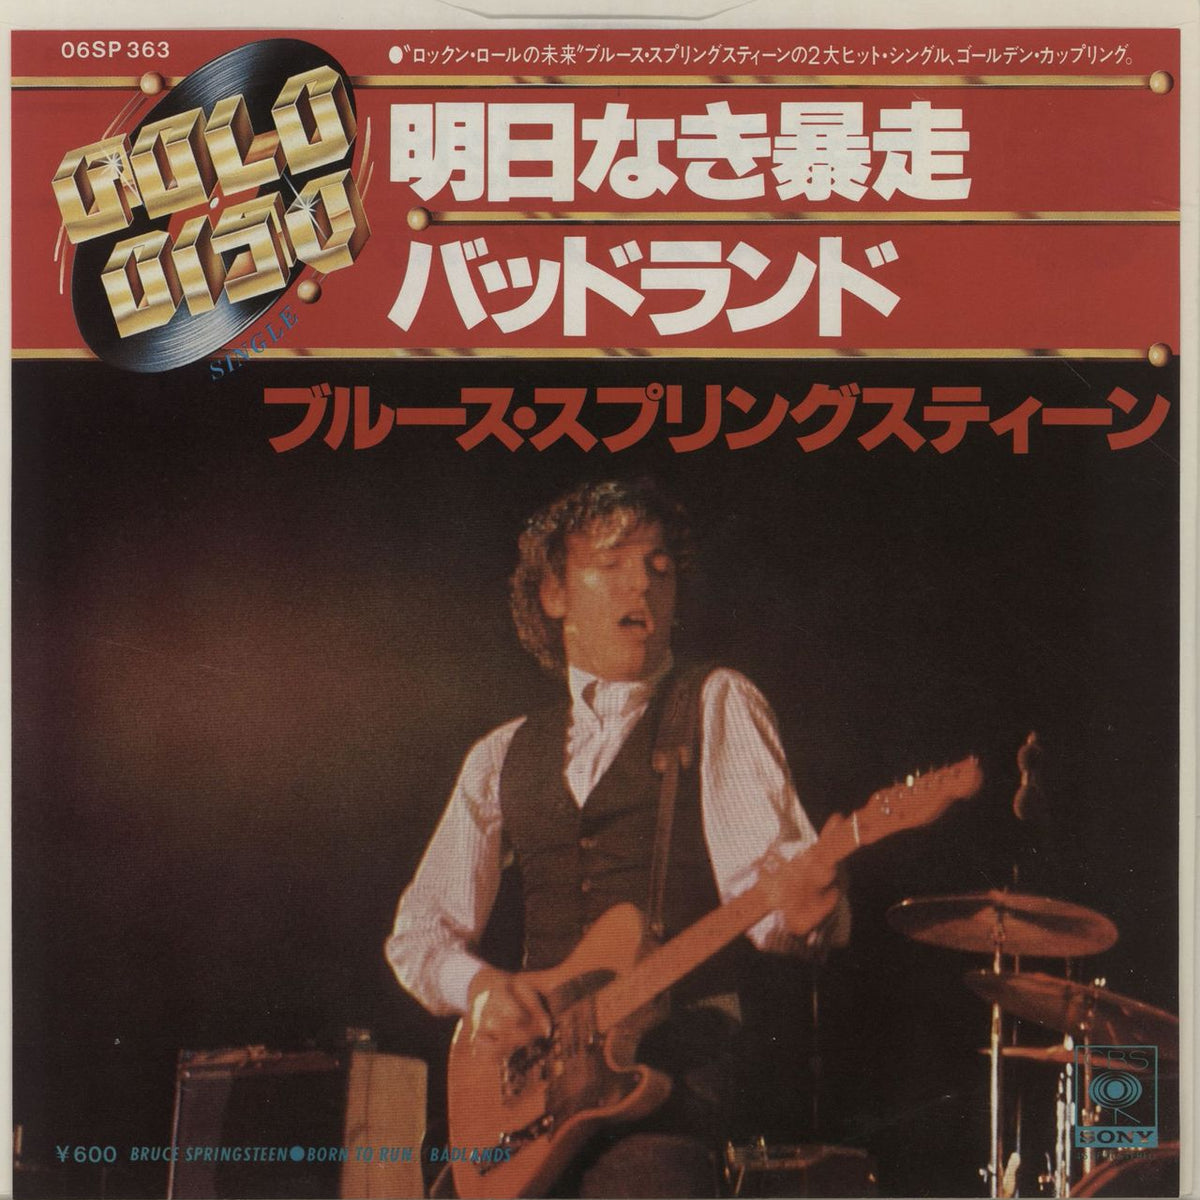 Bruce Springsteen Born To Run - Orange Label Japanese 7